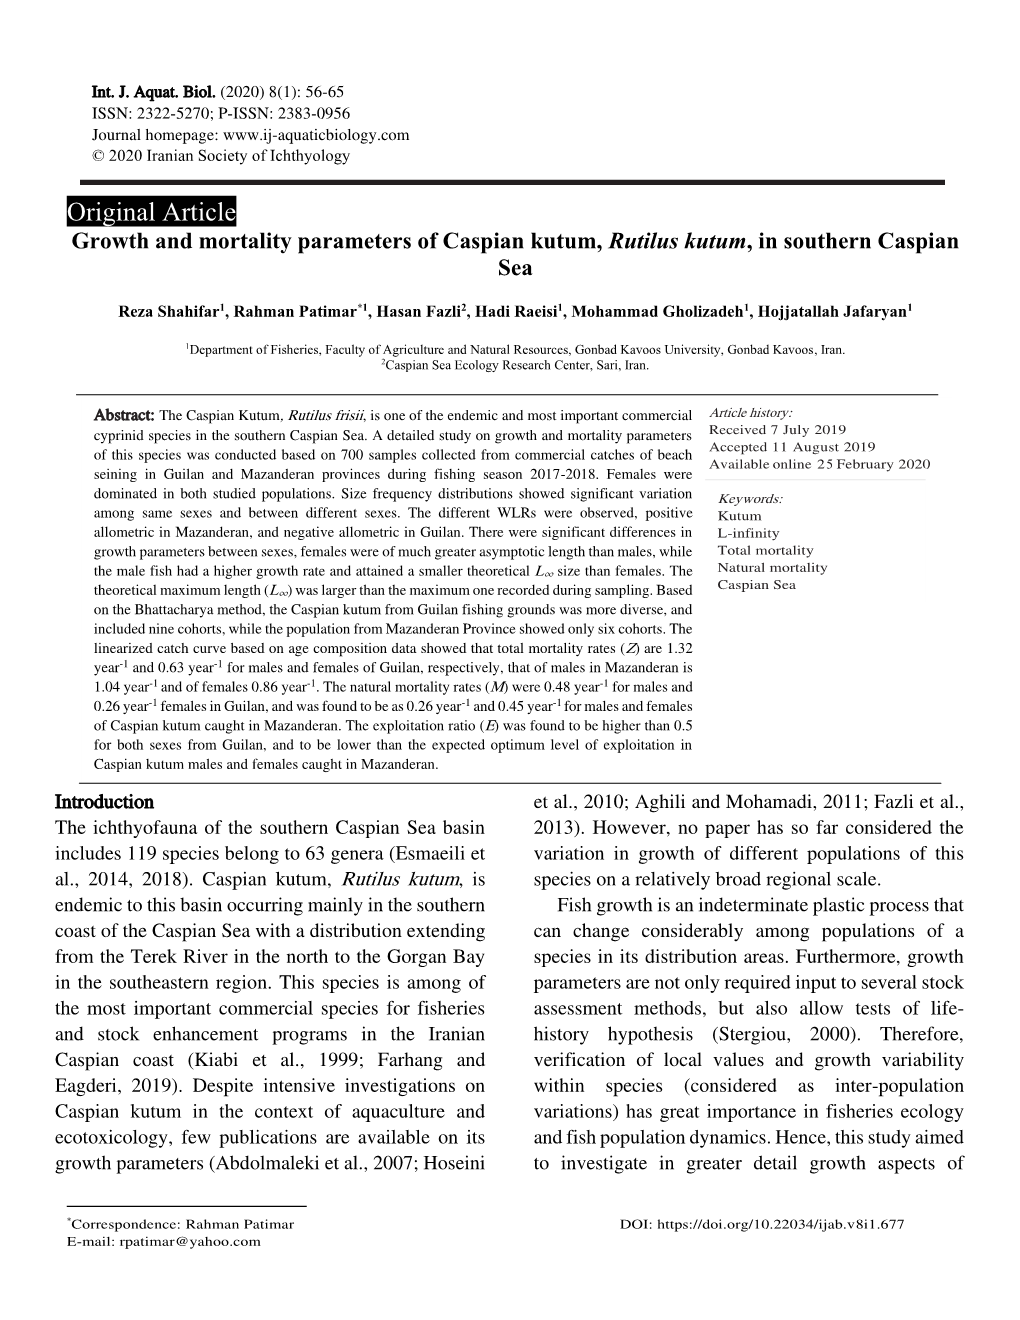 Original Article Growth and Mortality Parameters of Caspian Kutum, Rutilus Kutum, in Southern Caspian Sea